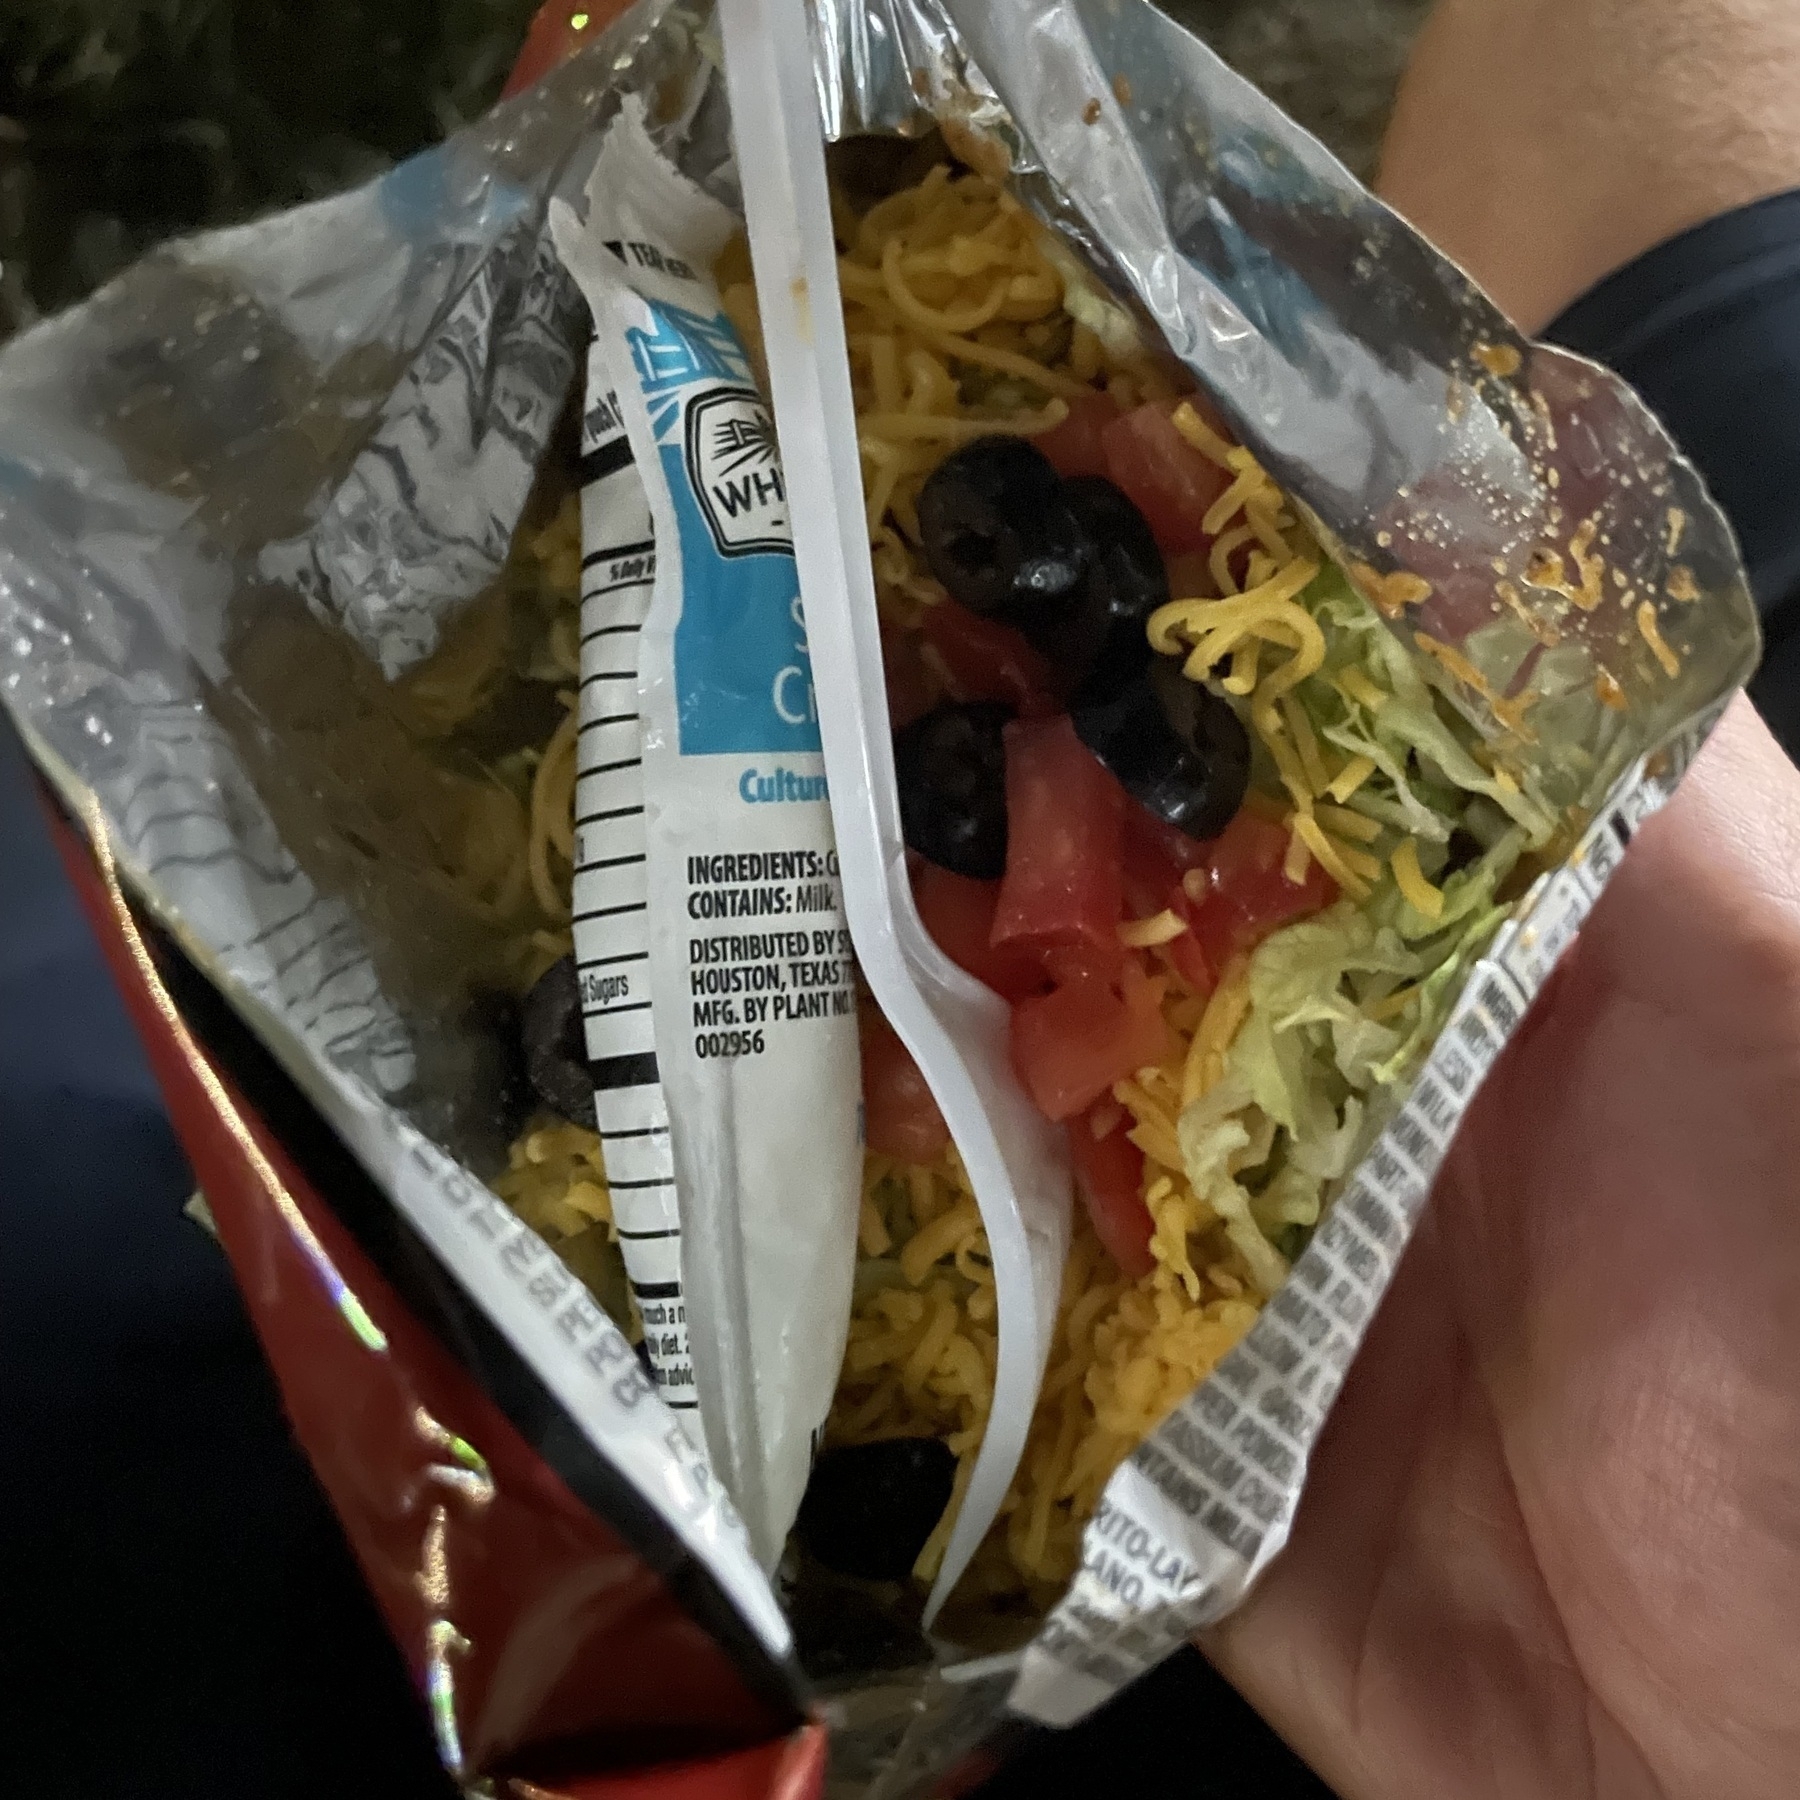 Open bag of Doritos with taco mix inside